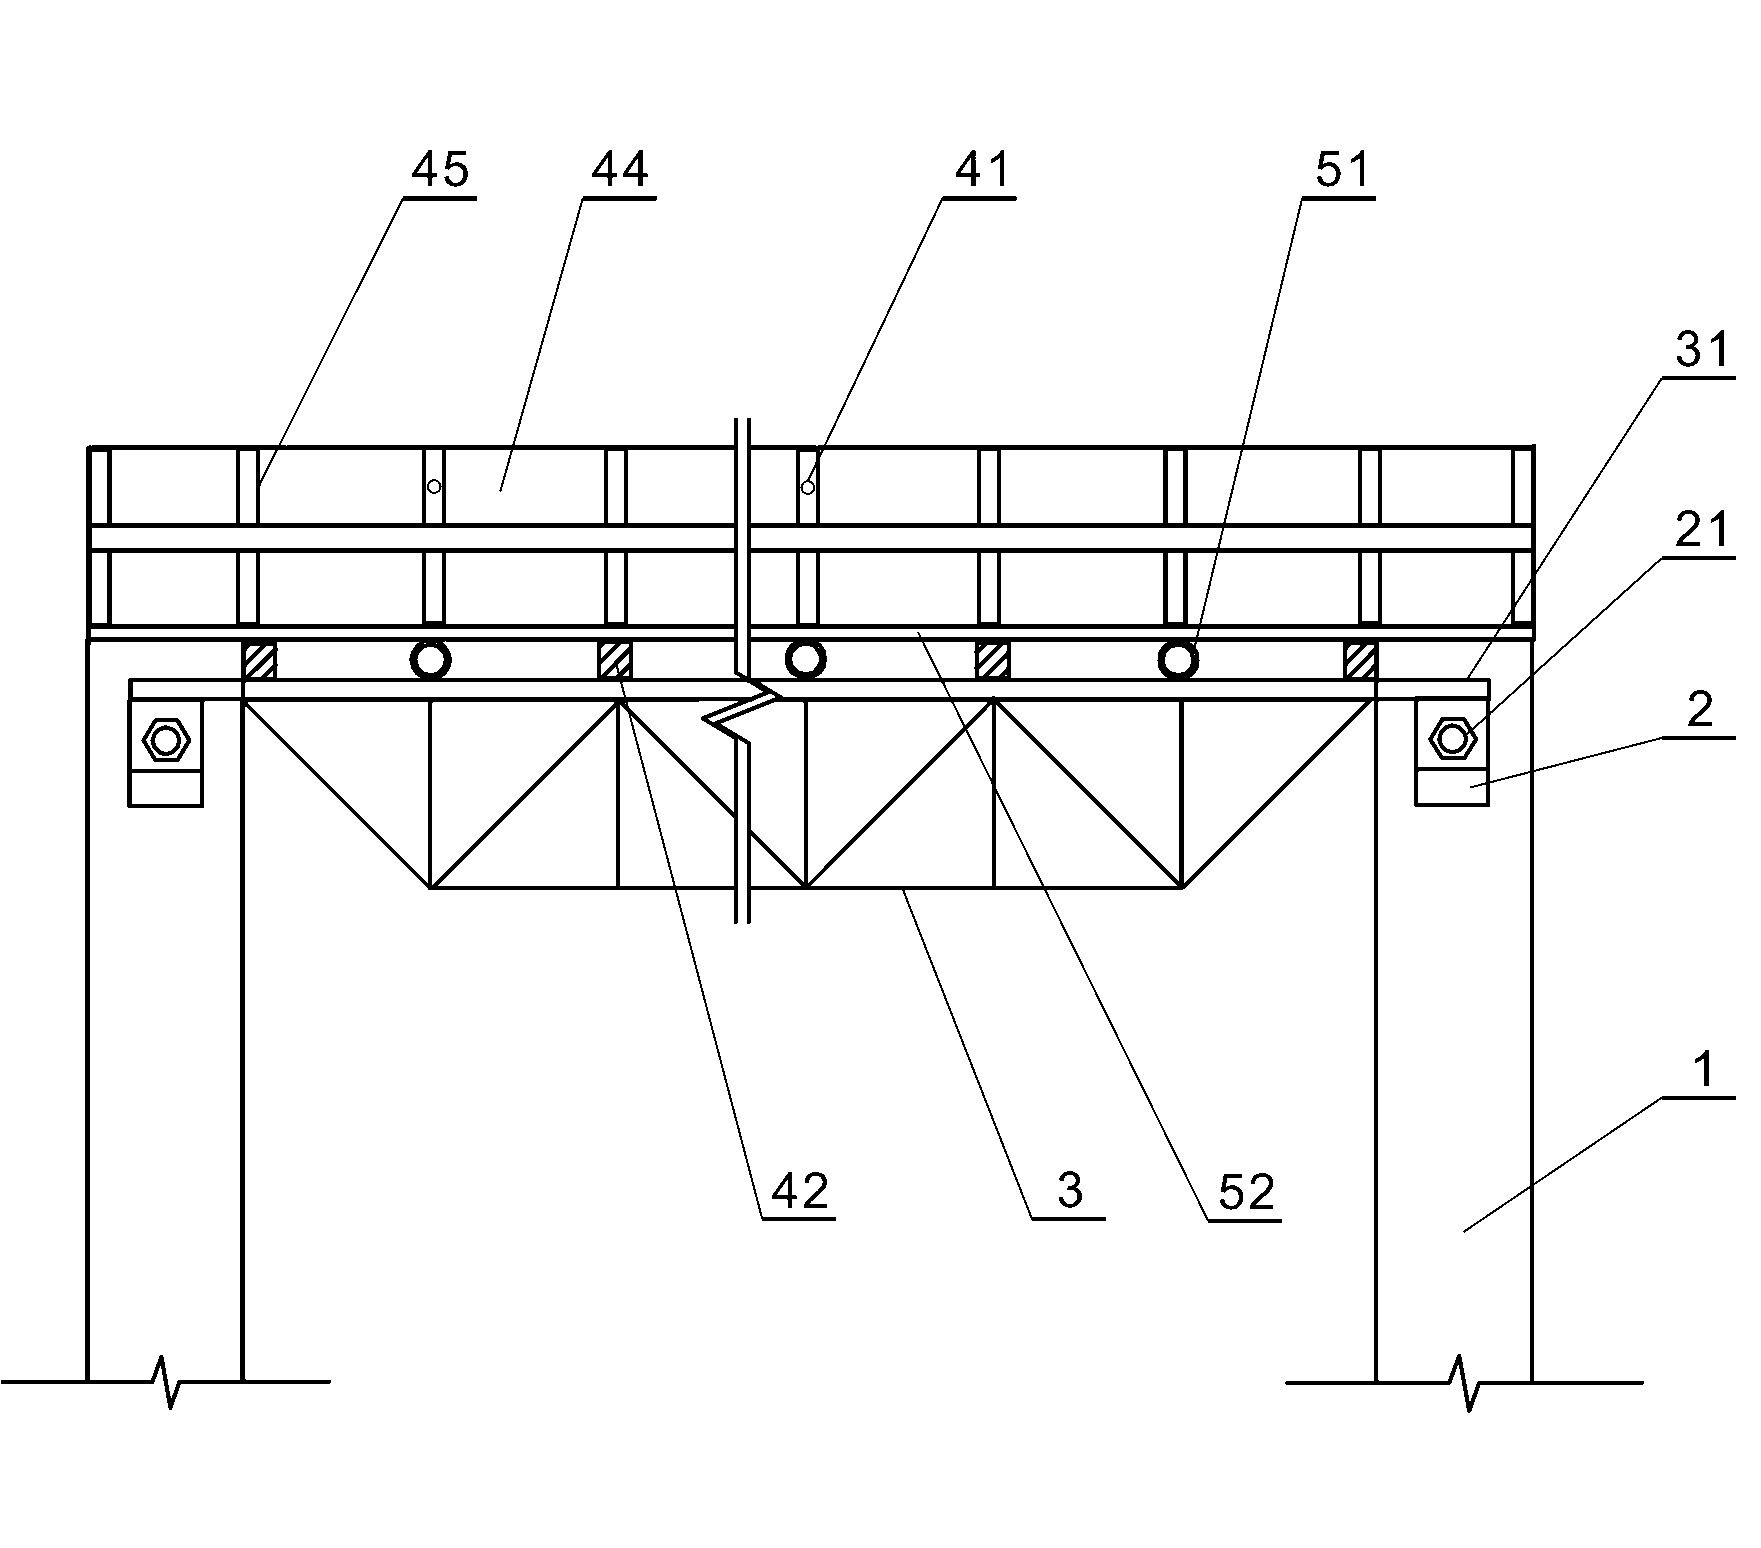 Method for supporting framework of concrete beam through suspension truss